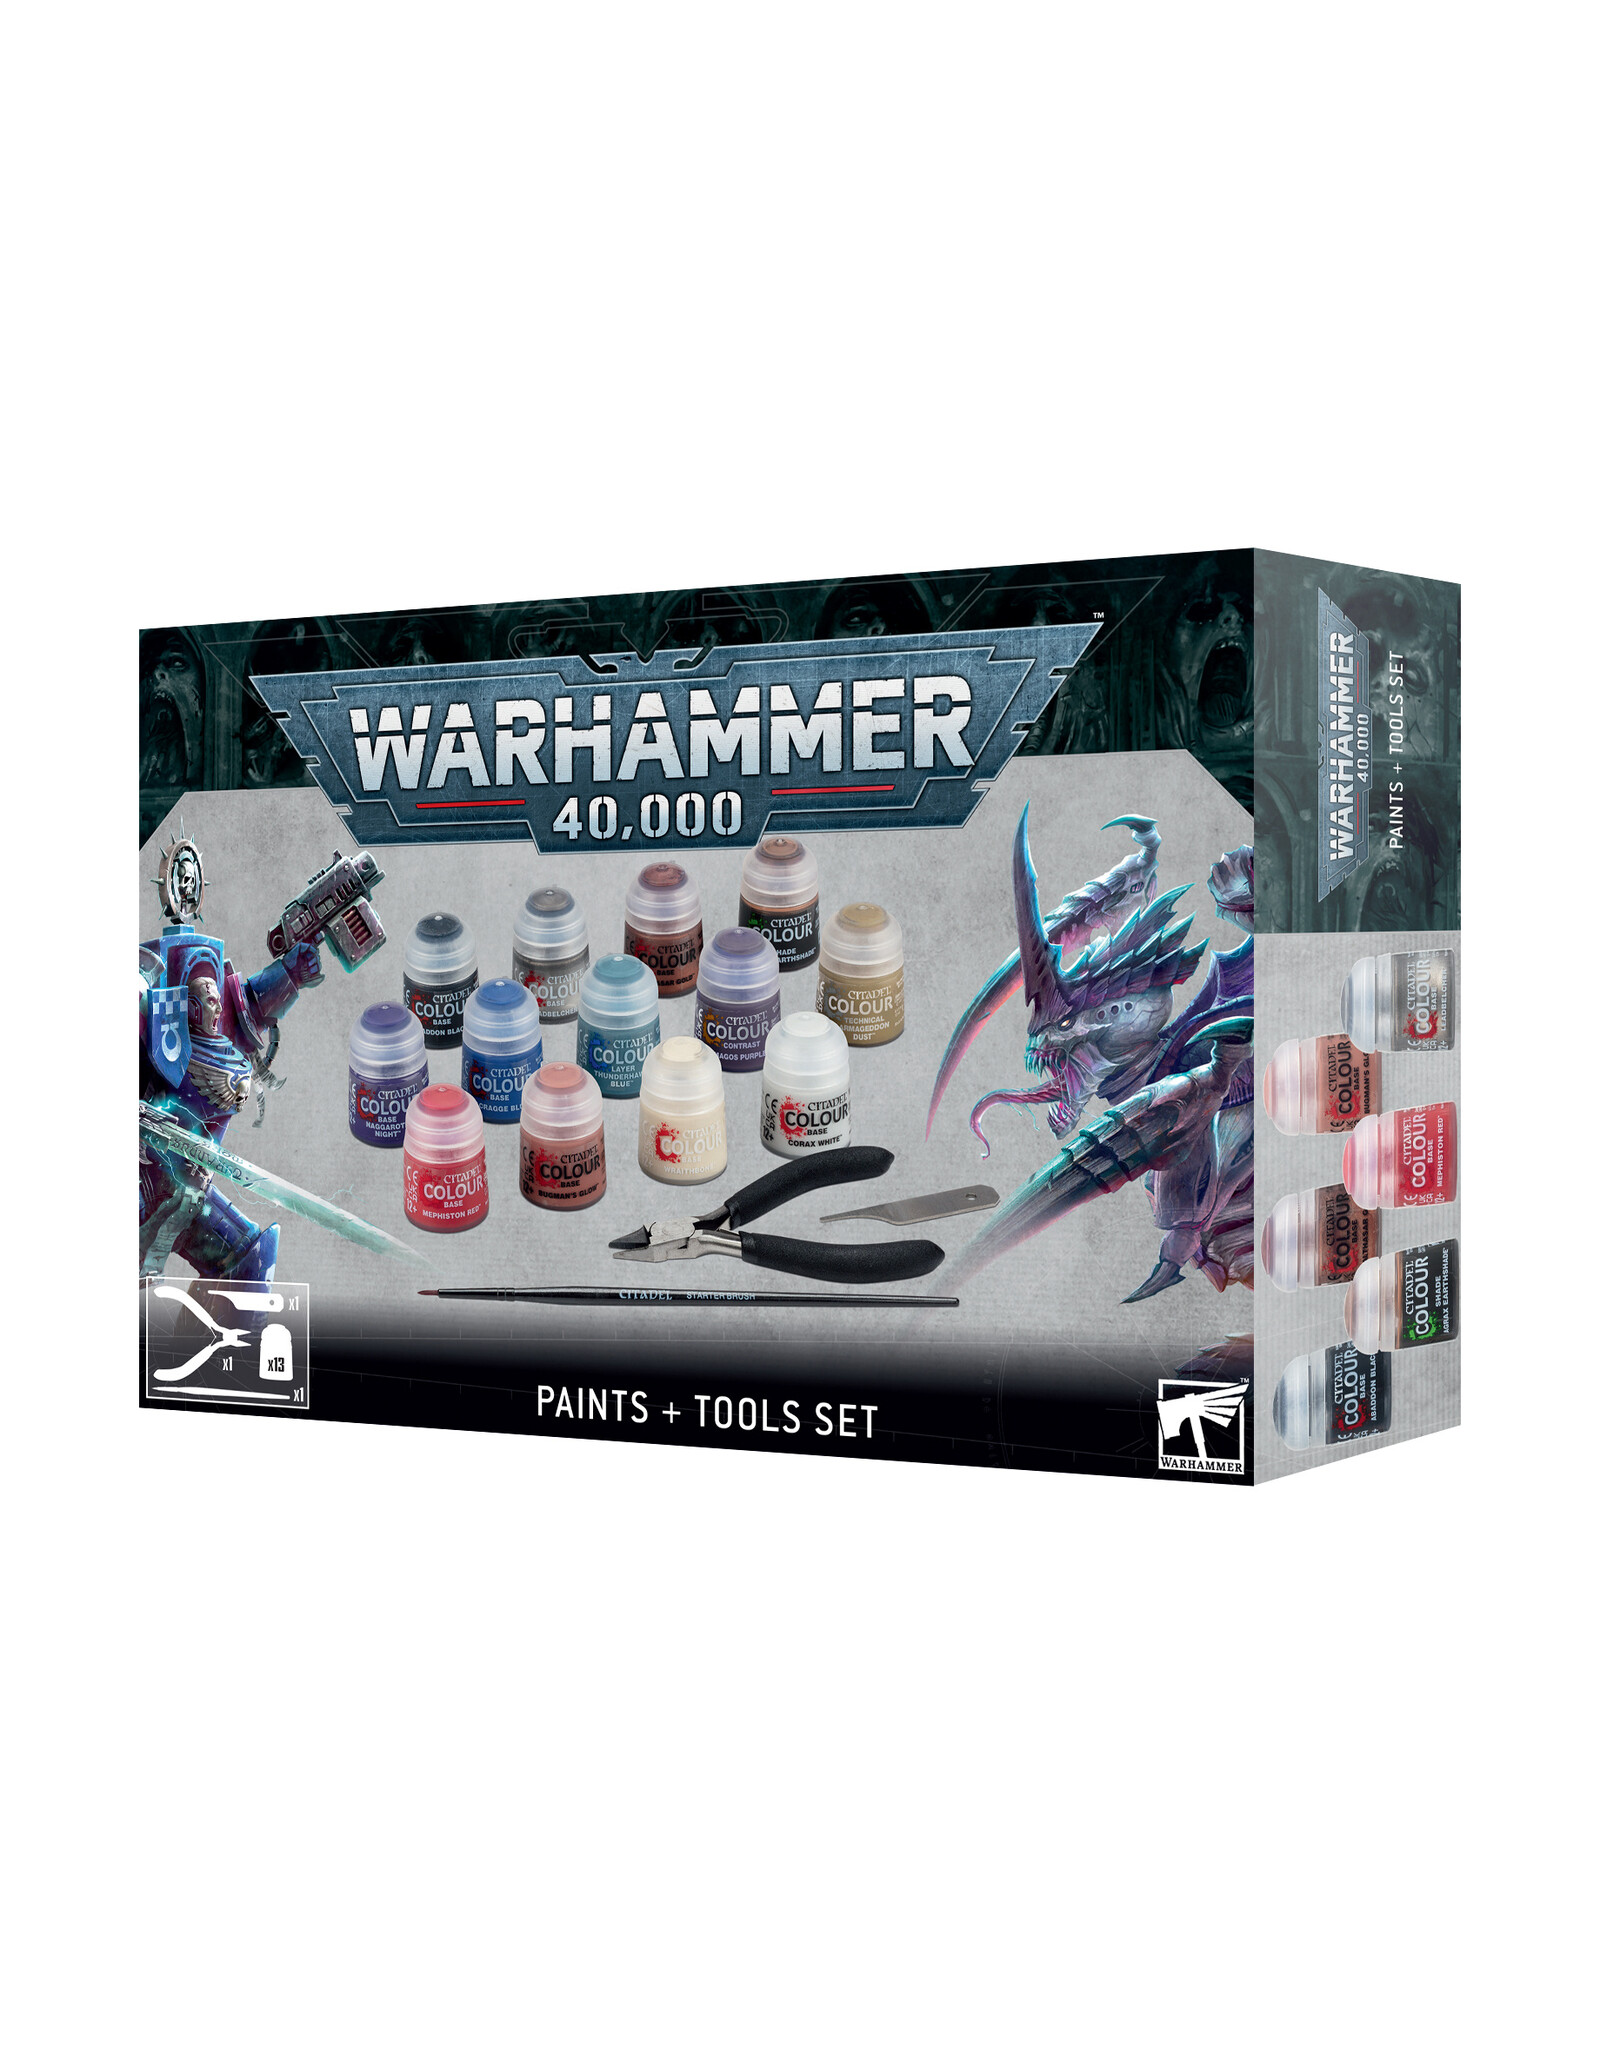 Warhammer 40K Warhammer 40,000 Paints + Tools Set